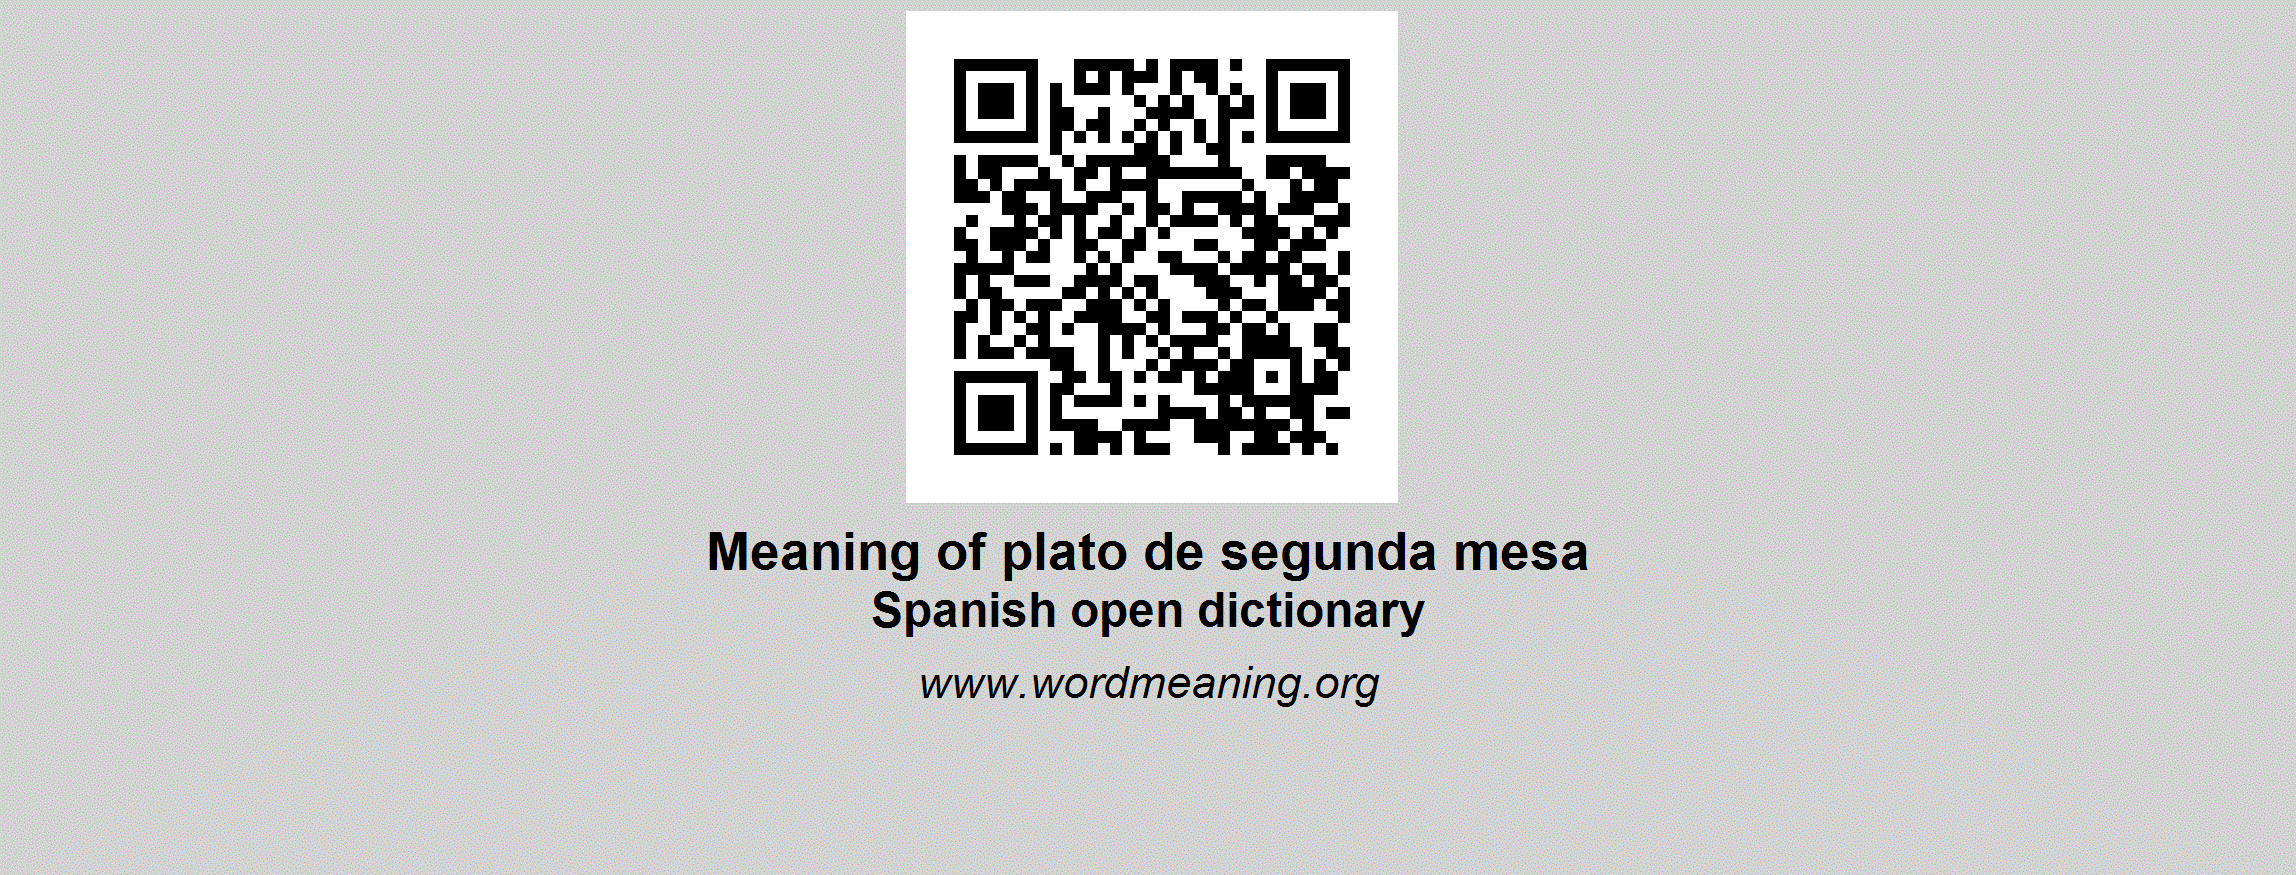 PLATO DE SEGUNDA MESA - Spanish open dictionary